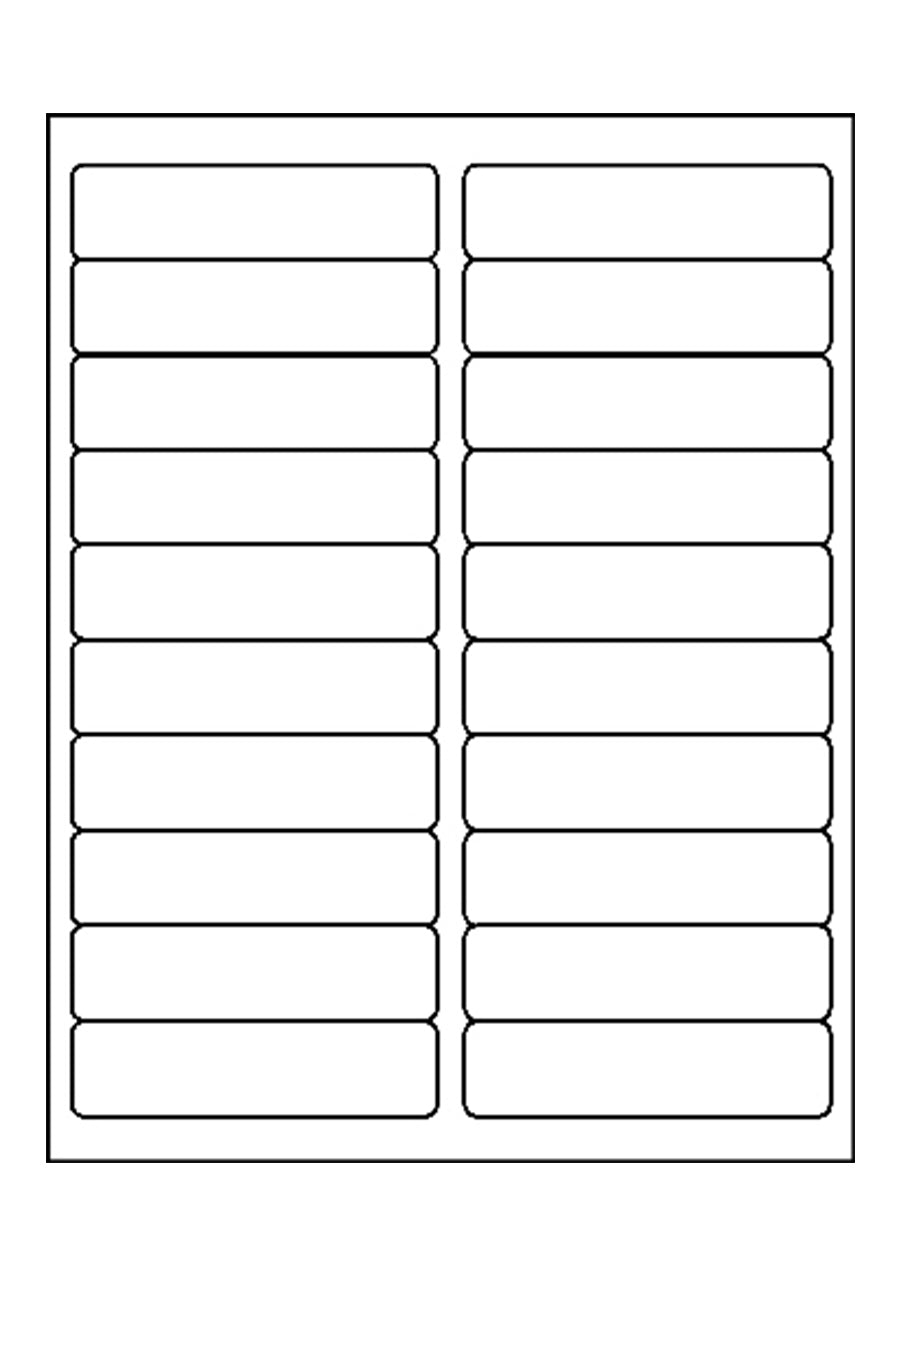 Laser/Ink Jet Recycled White Address Labels, 1" x 4", 20/Sheet, 2000 Labels/Bx